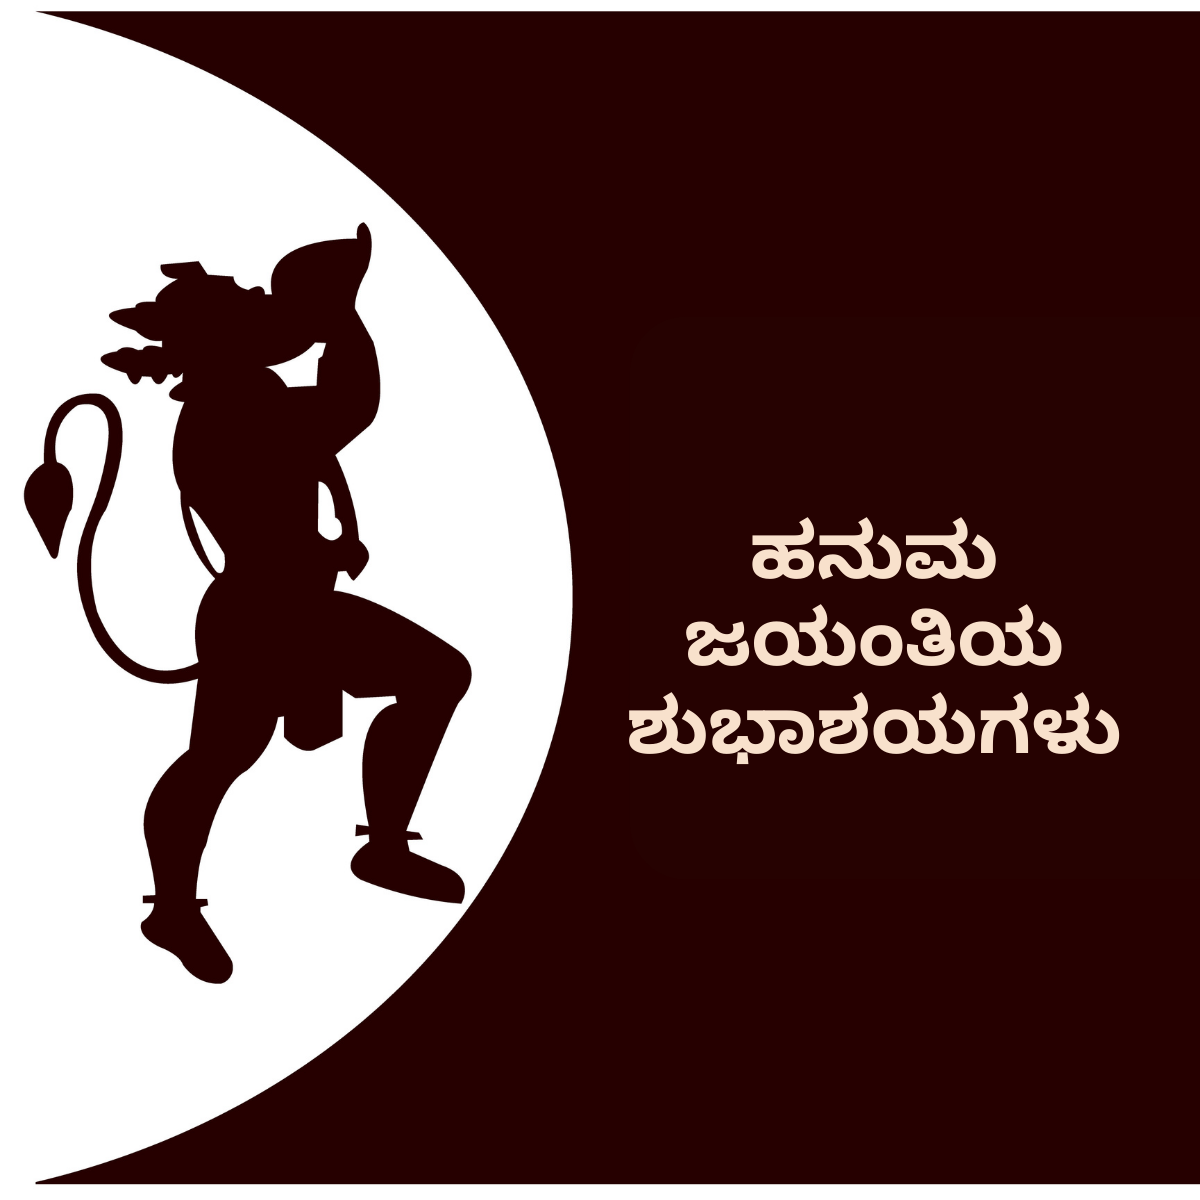 Happy Hanuman Jayanti 2023 Greetings in Kannada, Quotes, Images, Messages, Wishes, Sayings, and Shayari